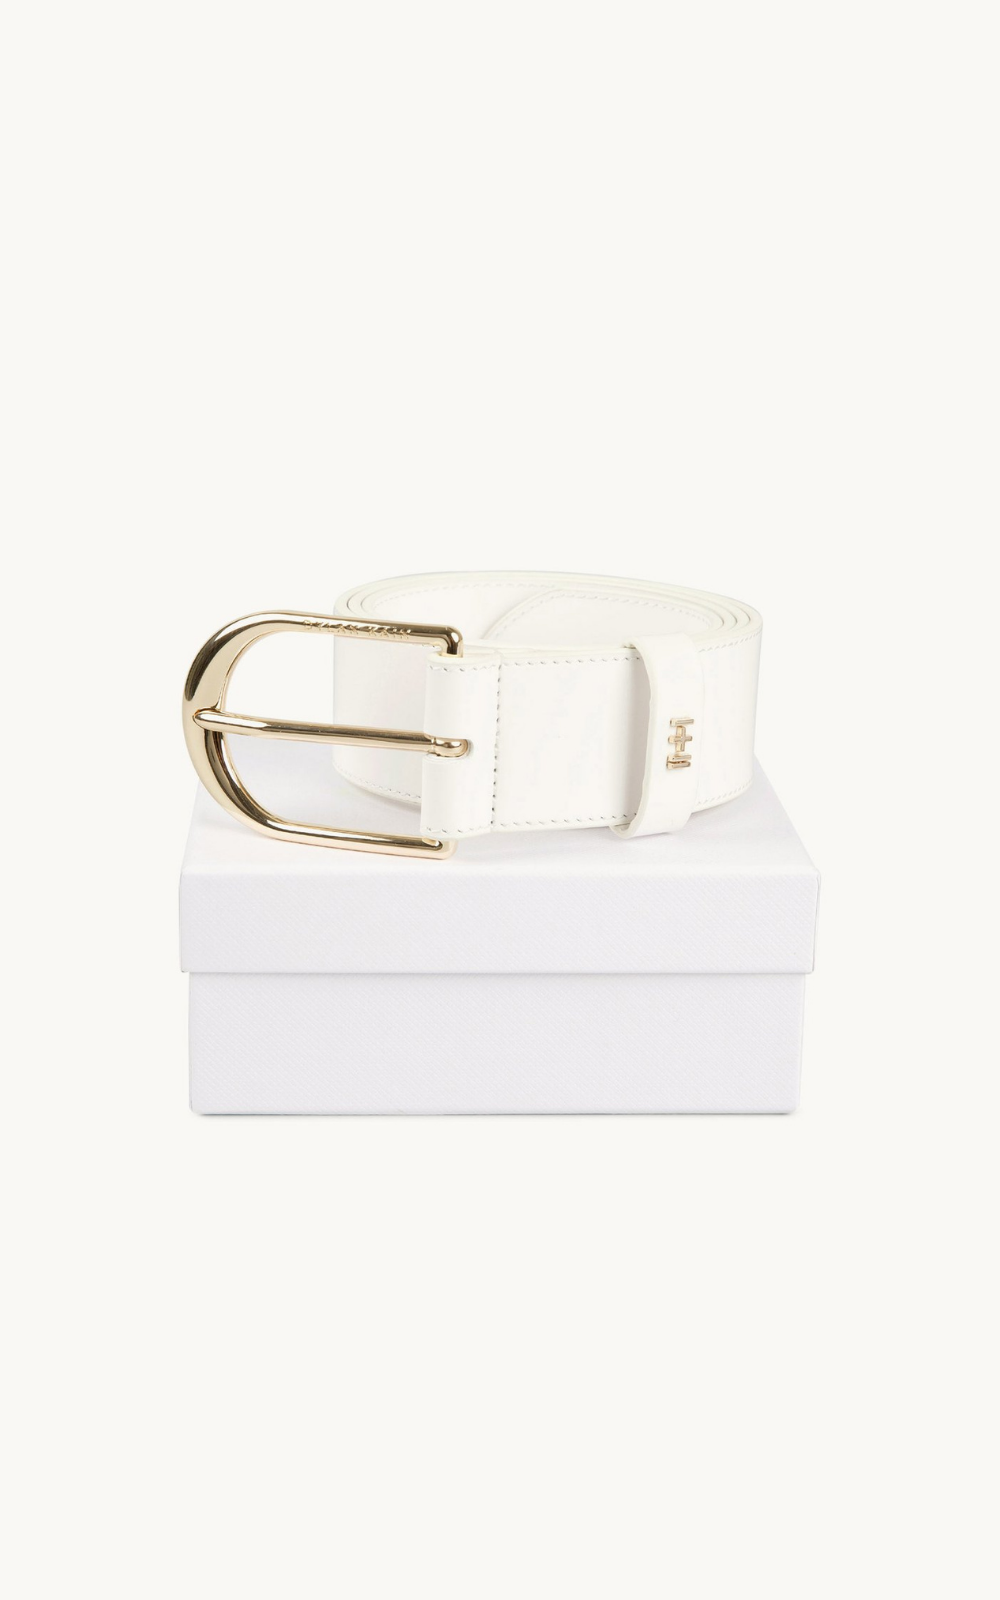 The Nika Lux Belt White - Light Gold